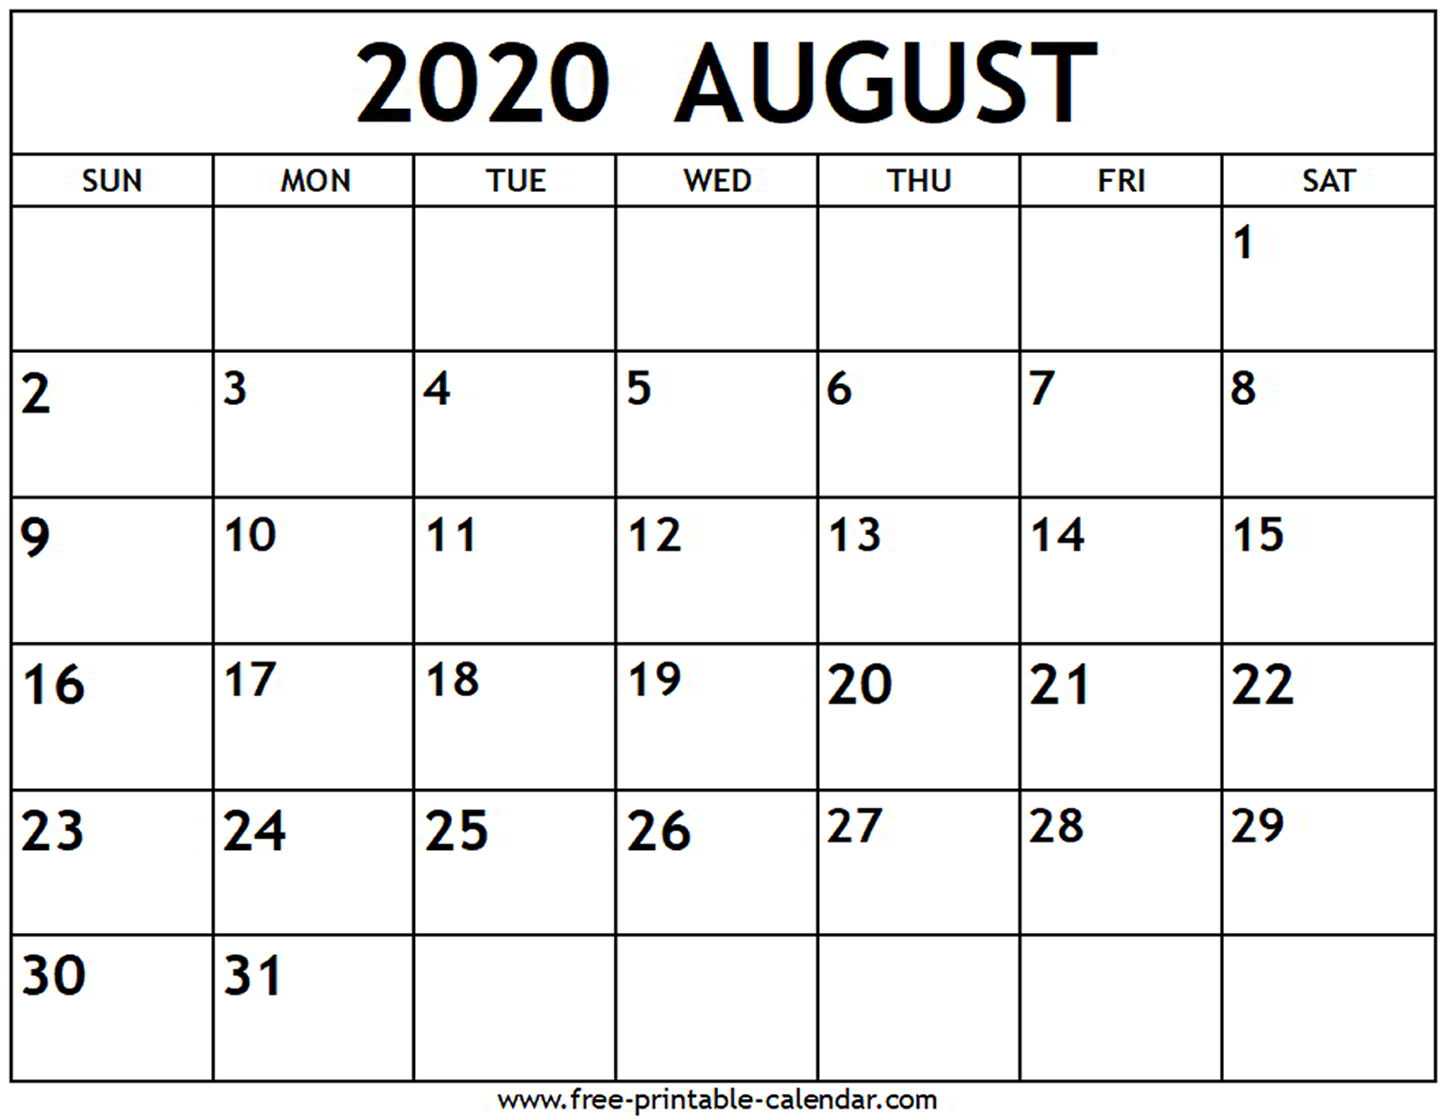 August 2020 Calendar - Free-Printable-Calendar